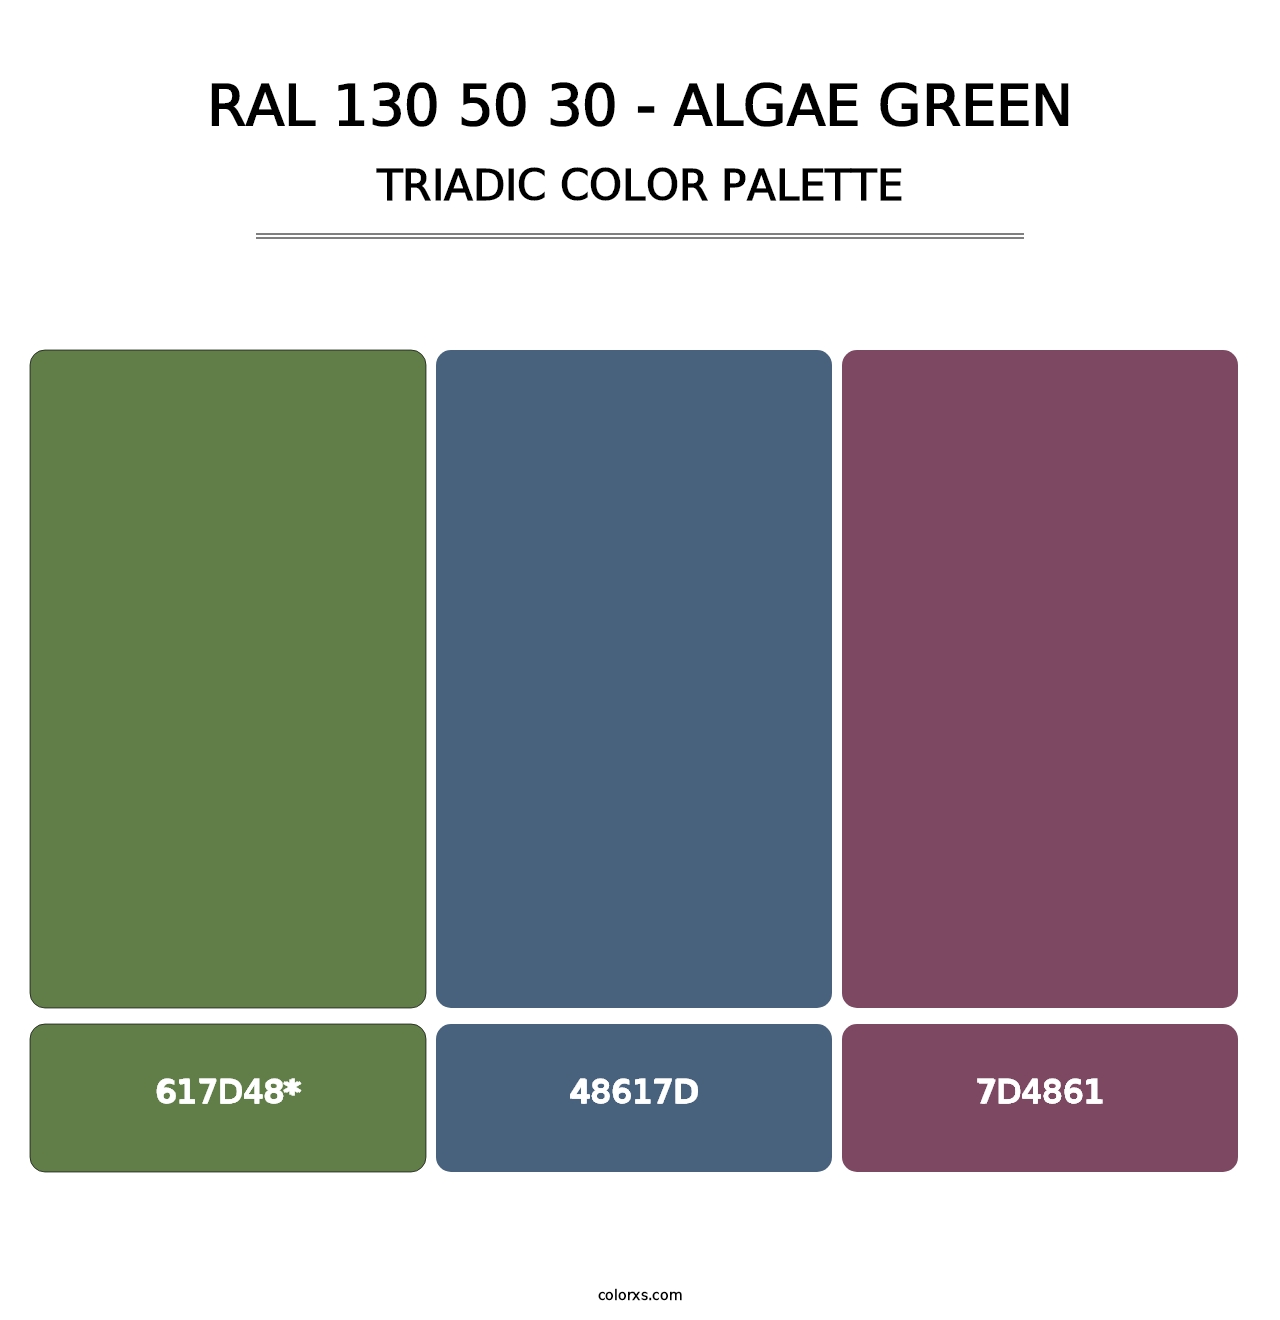 RAL 130 50 30 - Algae Green - Triadic Color Palette